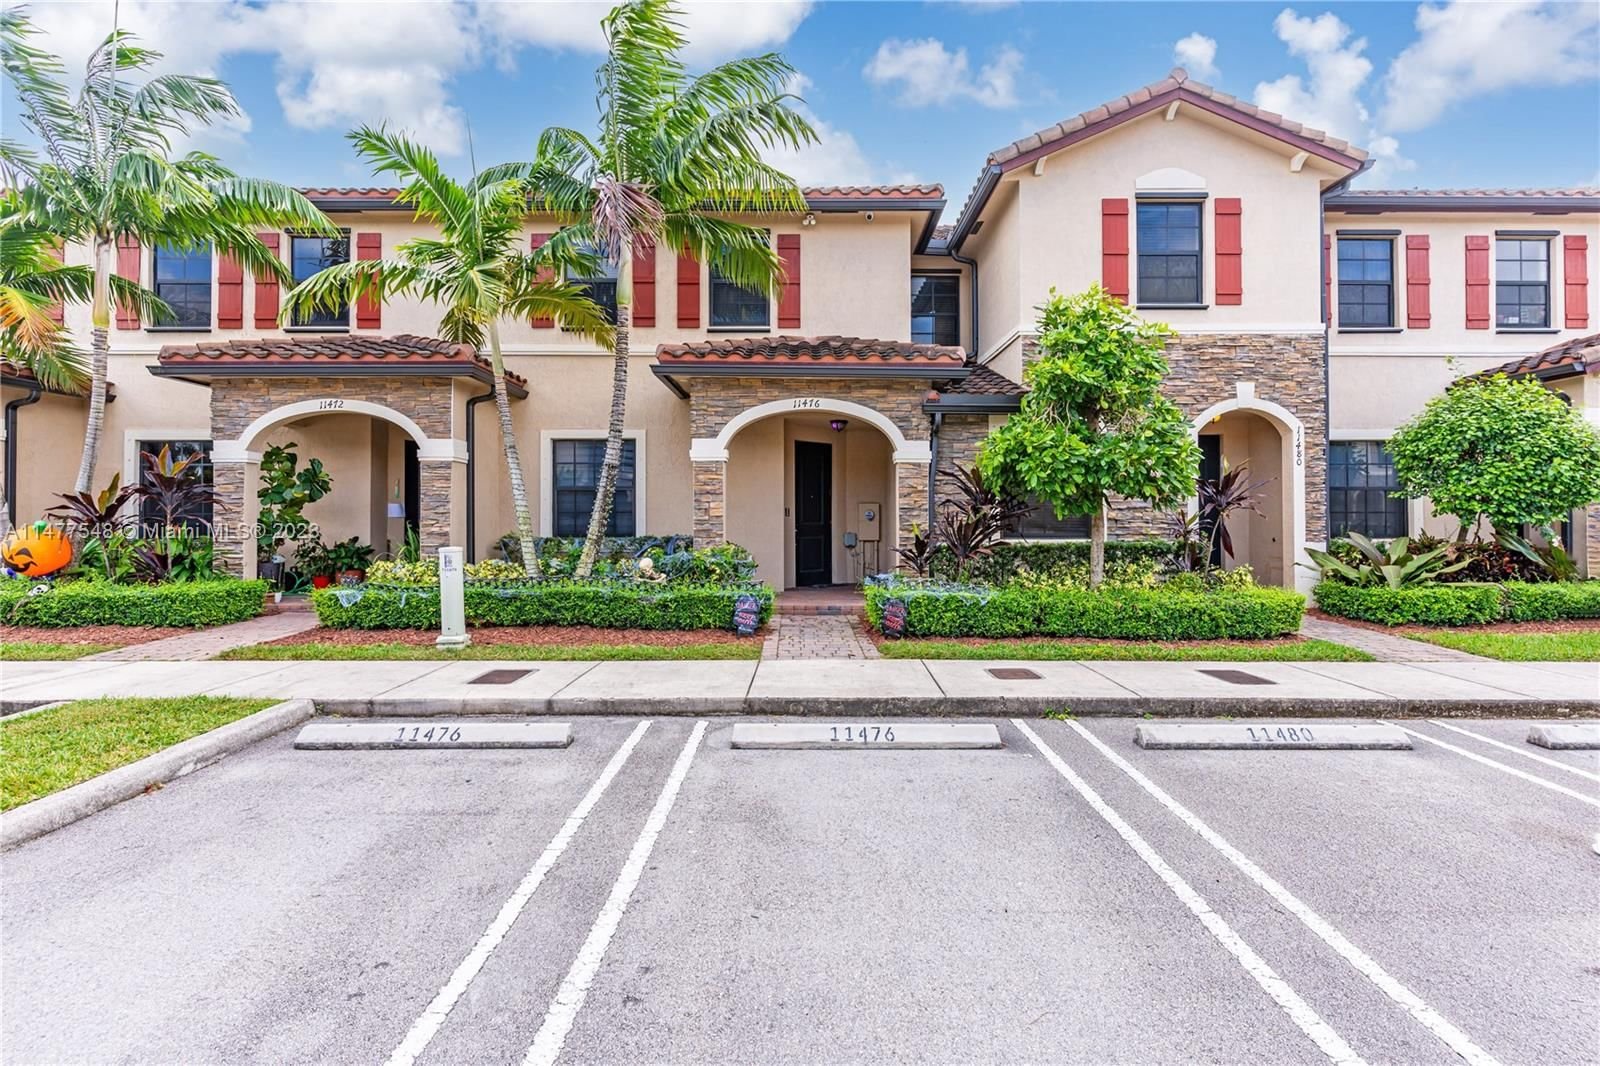 Real estate property located at 11476 250th St #11476, Miami-Dade County, COCO PALM ESTATES, Homestead, FL